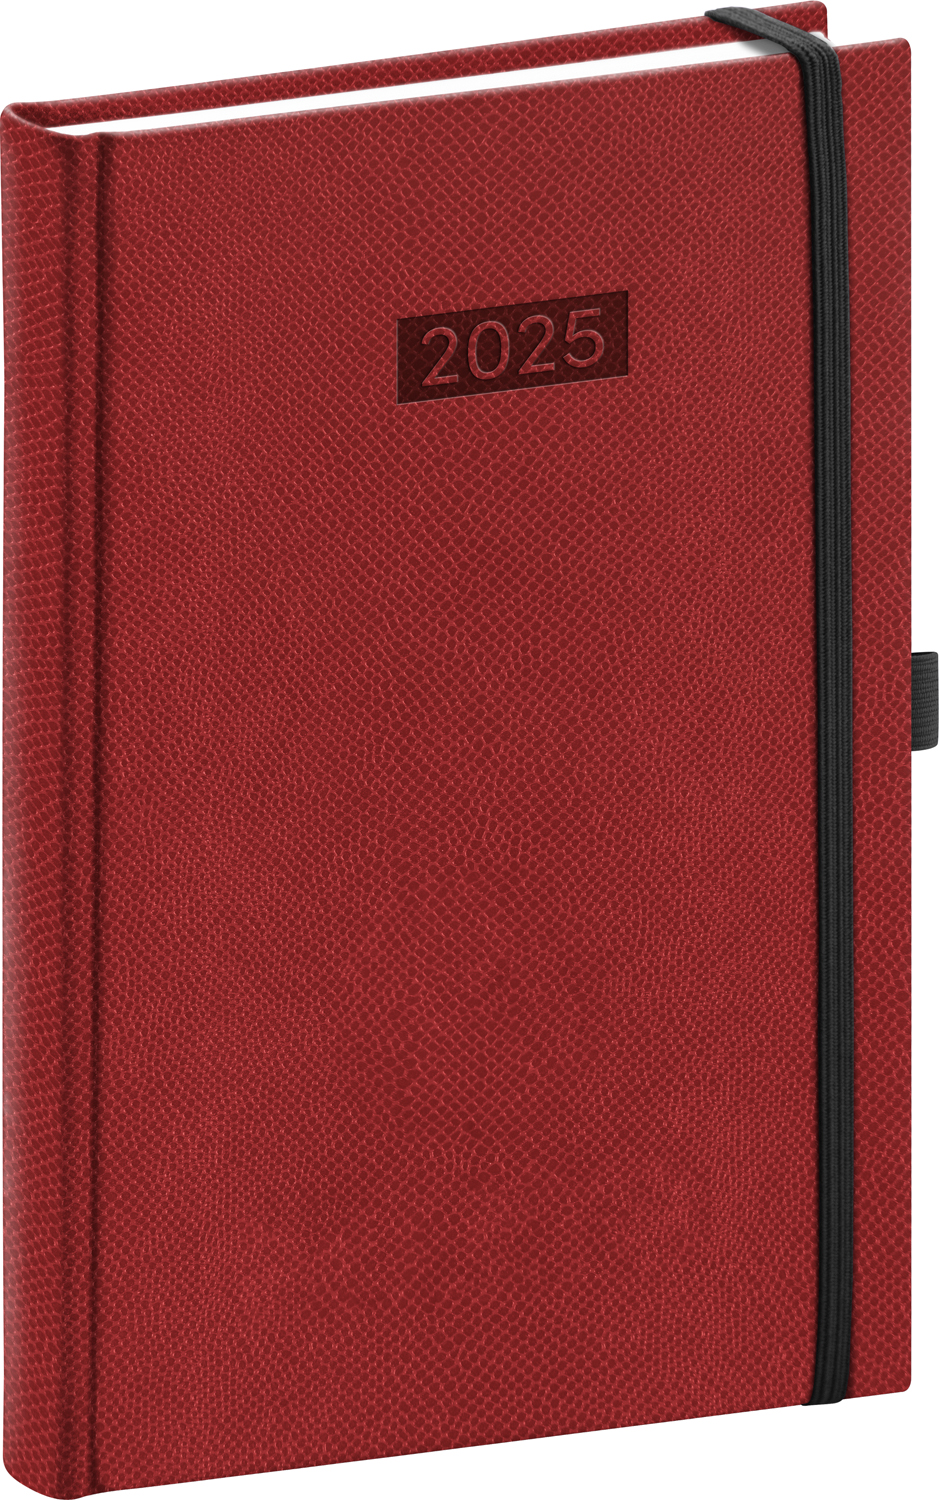 Denní diář Diario 2025, A5 - červená